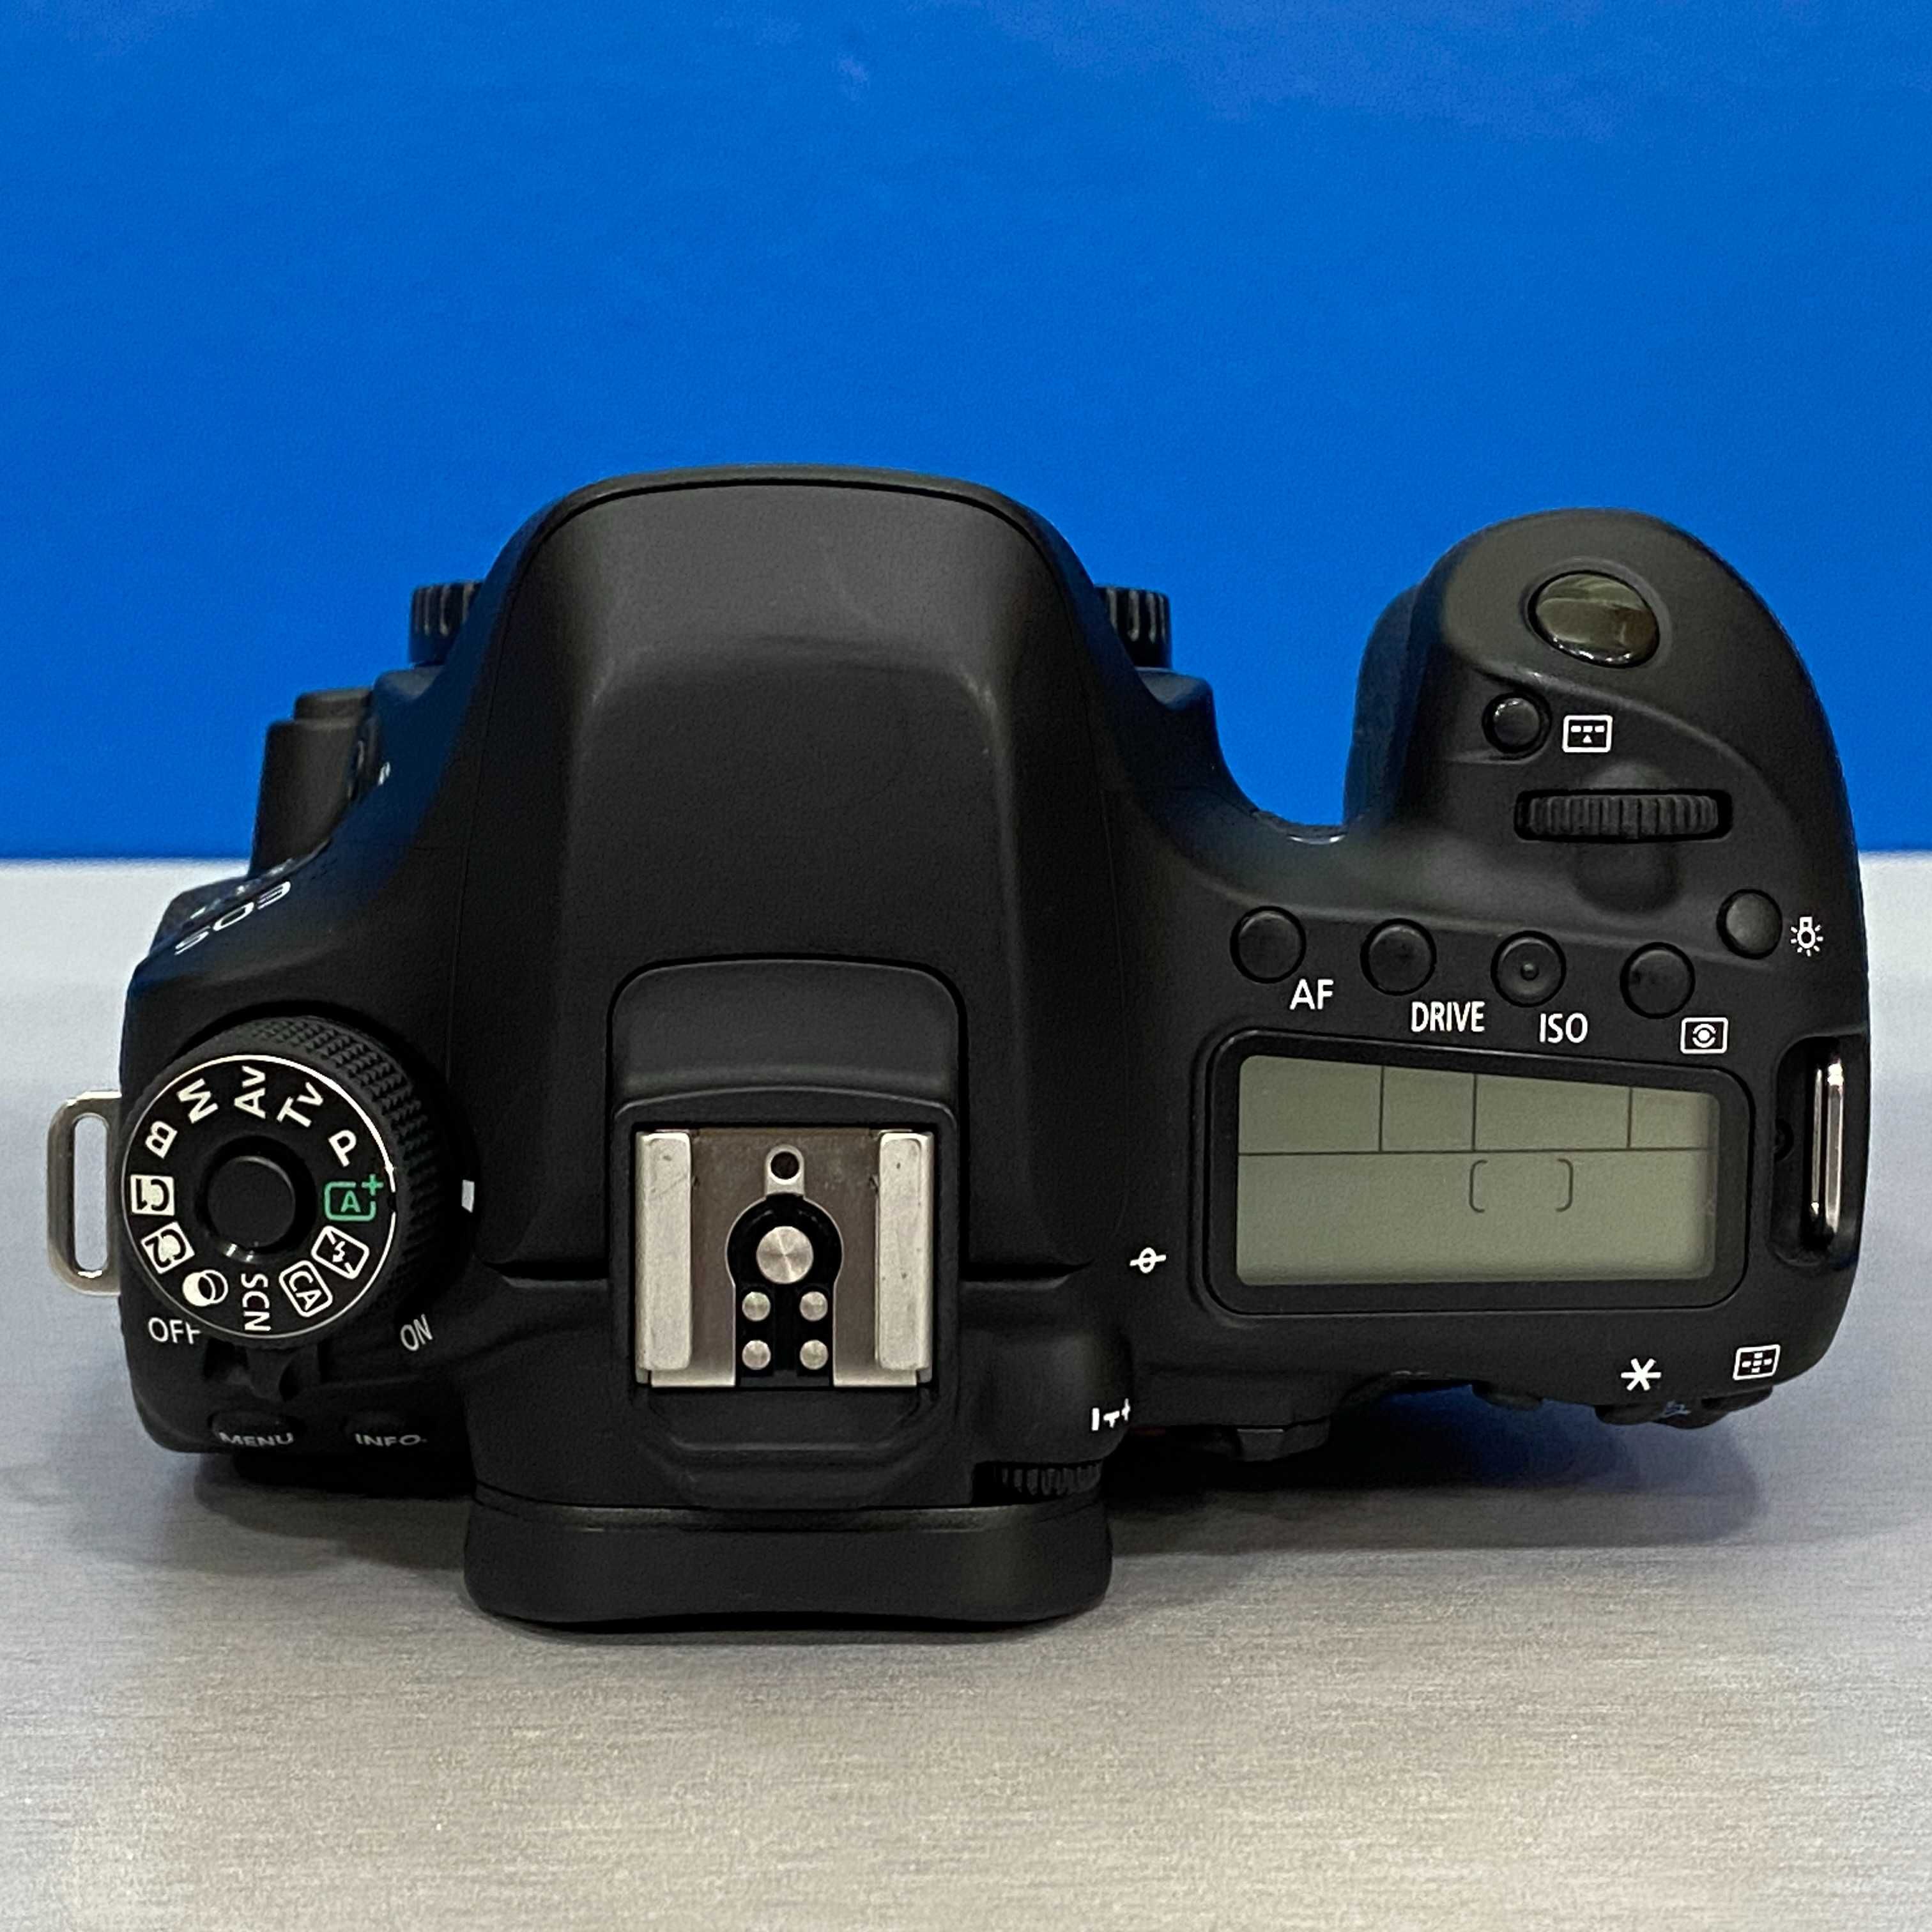 Canon EOS 80D (Corpo) - 24.2MP